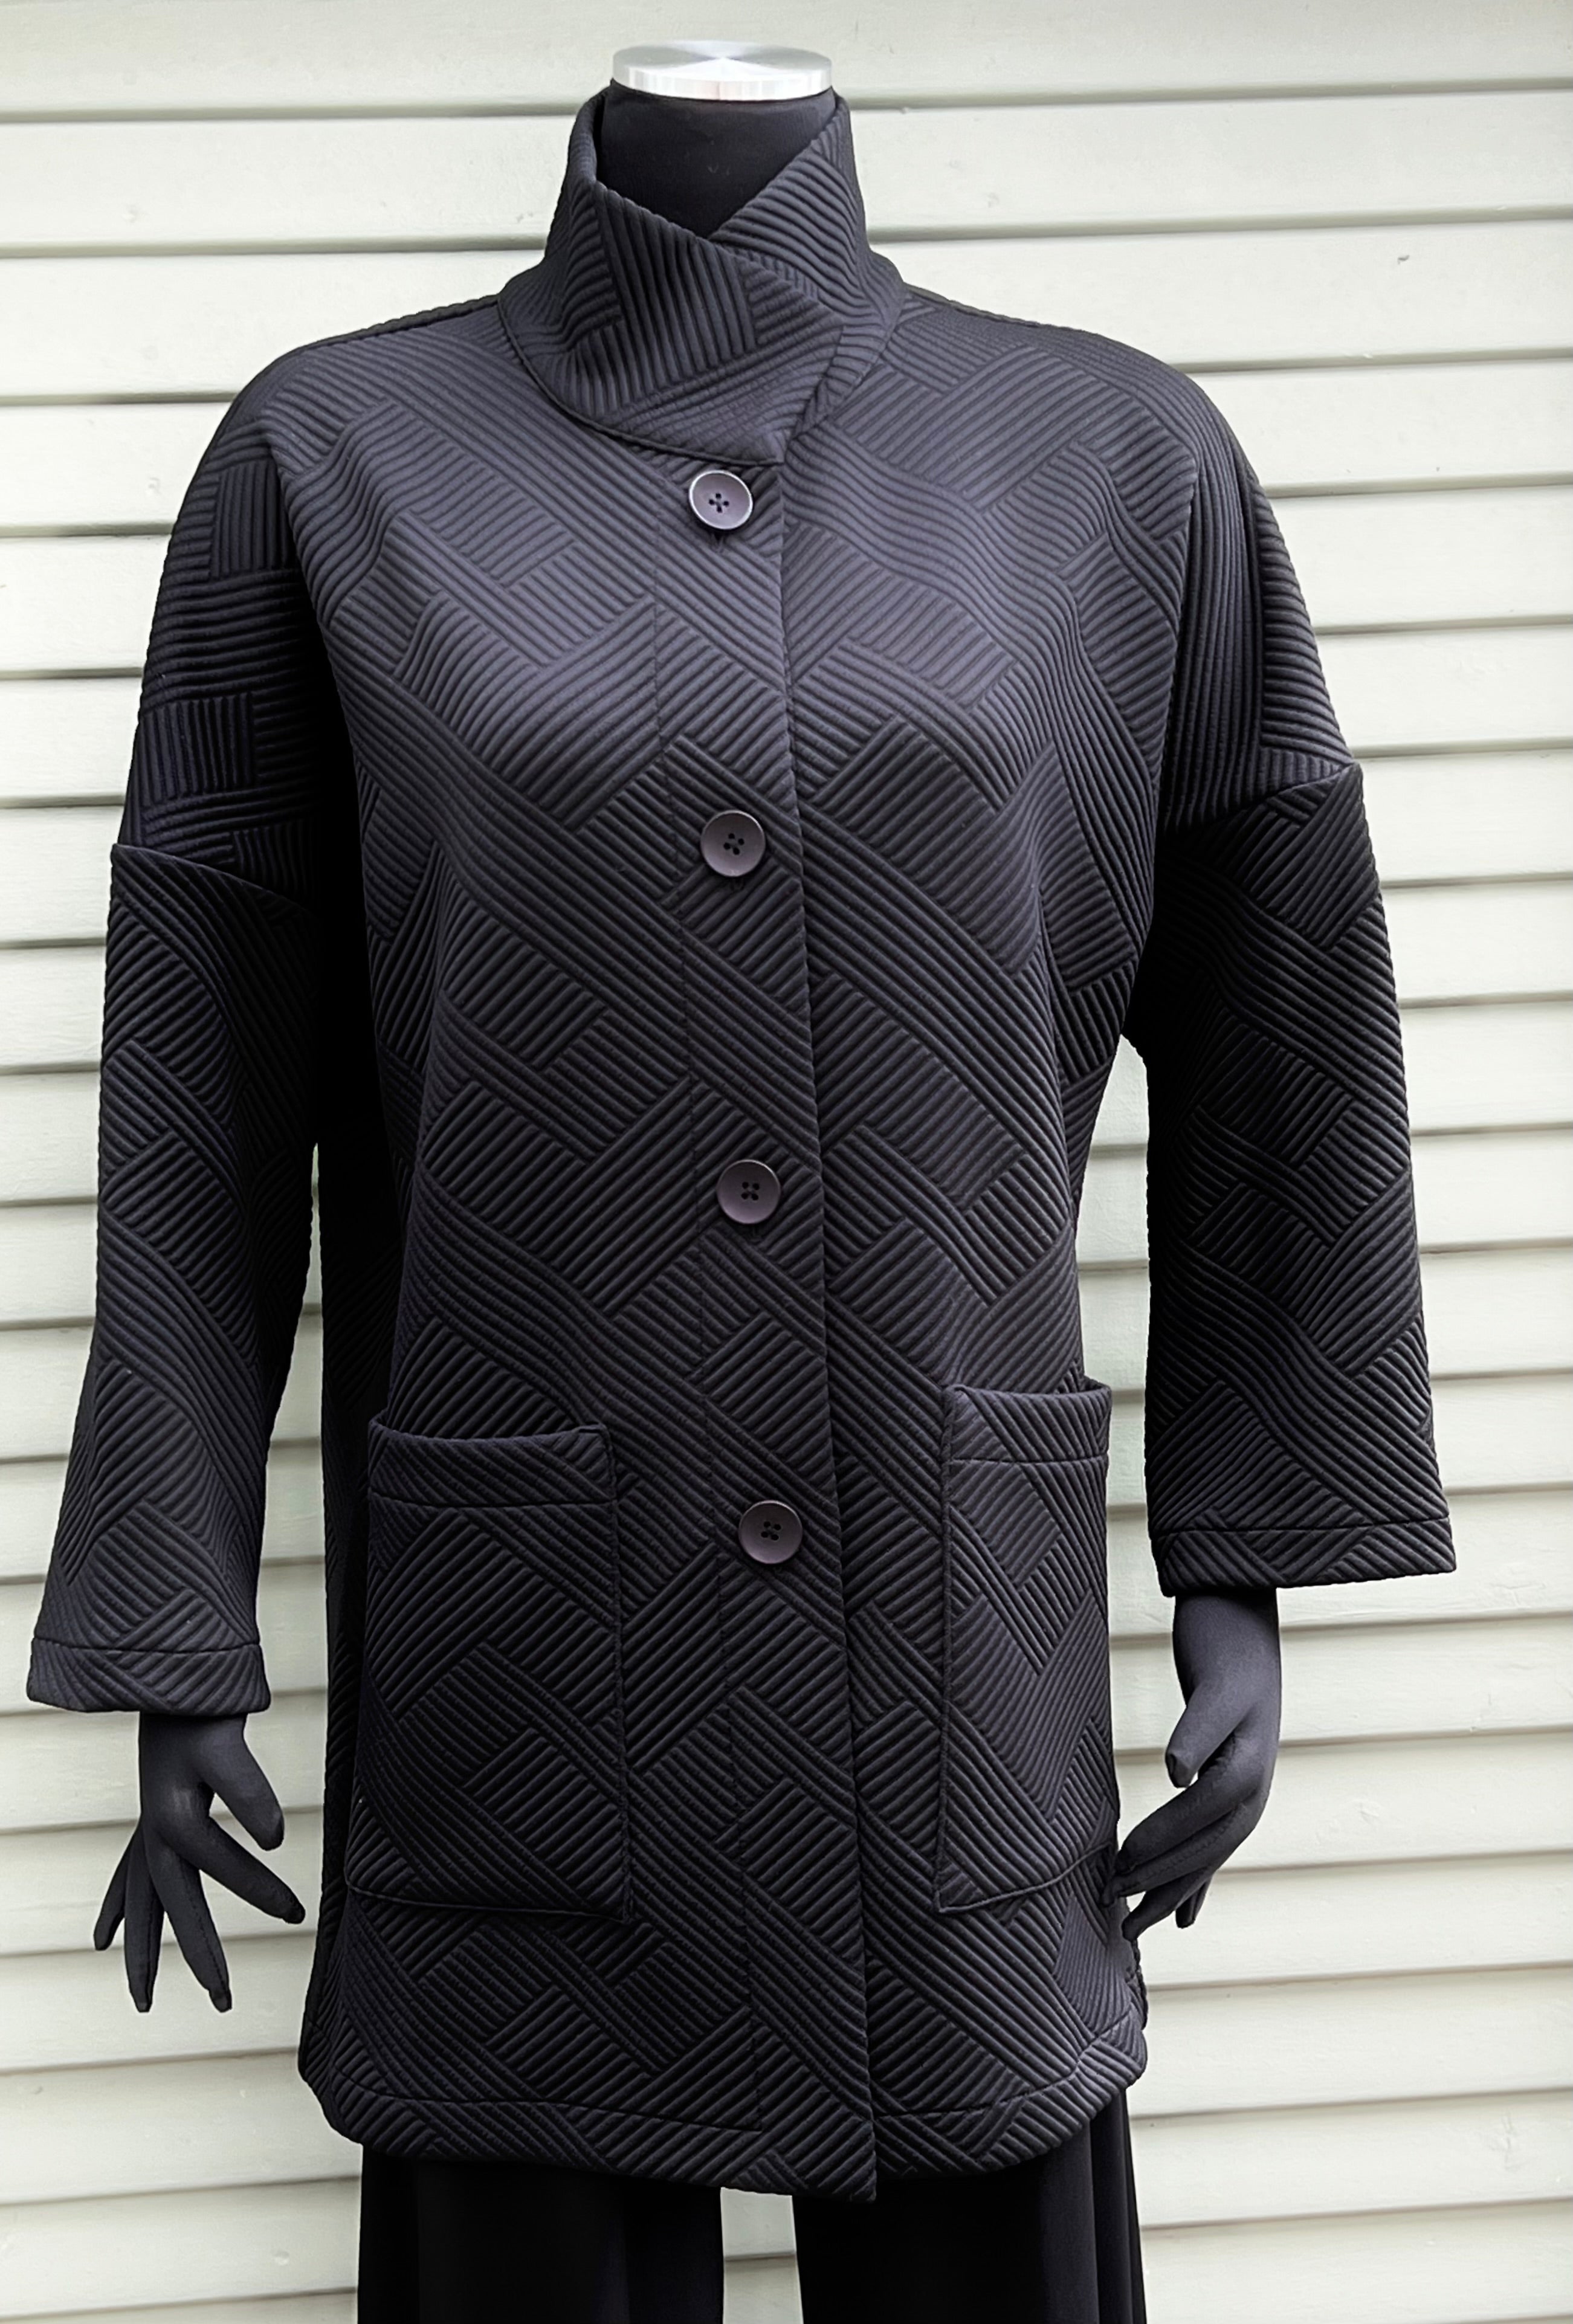 Christopher Calvin 1638BK Black Lattice Quilt Jacket